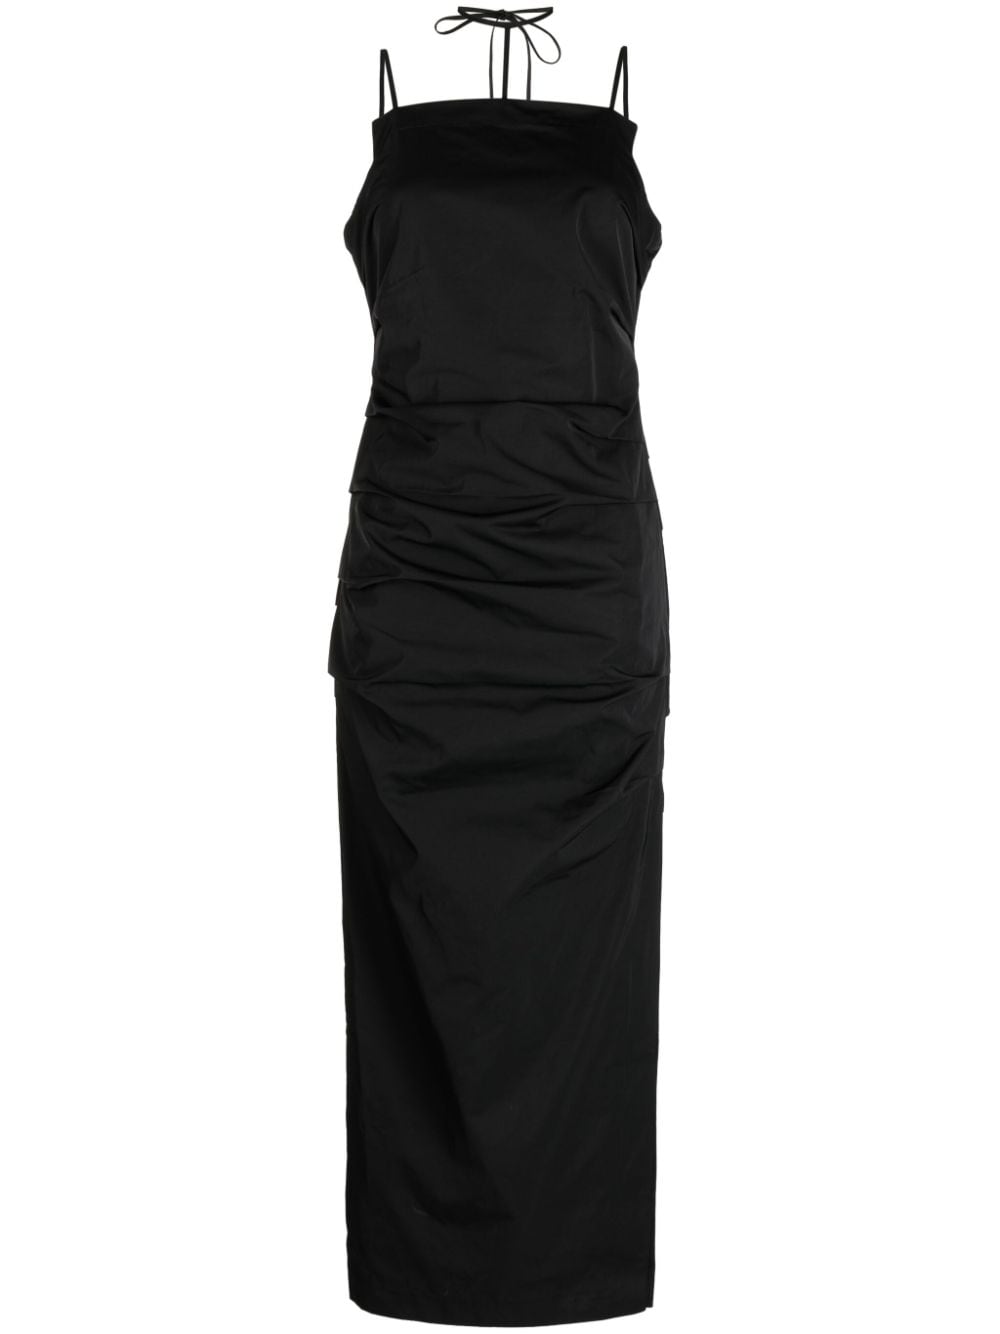 Rachel Gilbert Prescott multi-strap fitted dress - Black von Rachel Gilbert